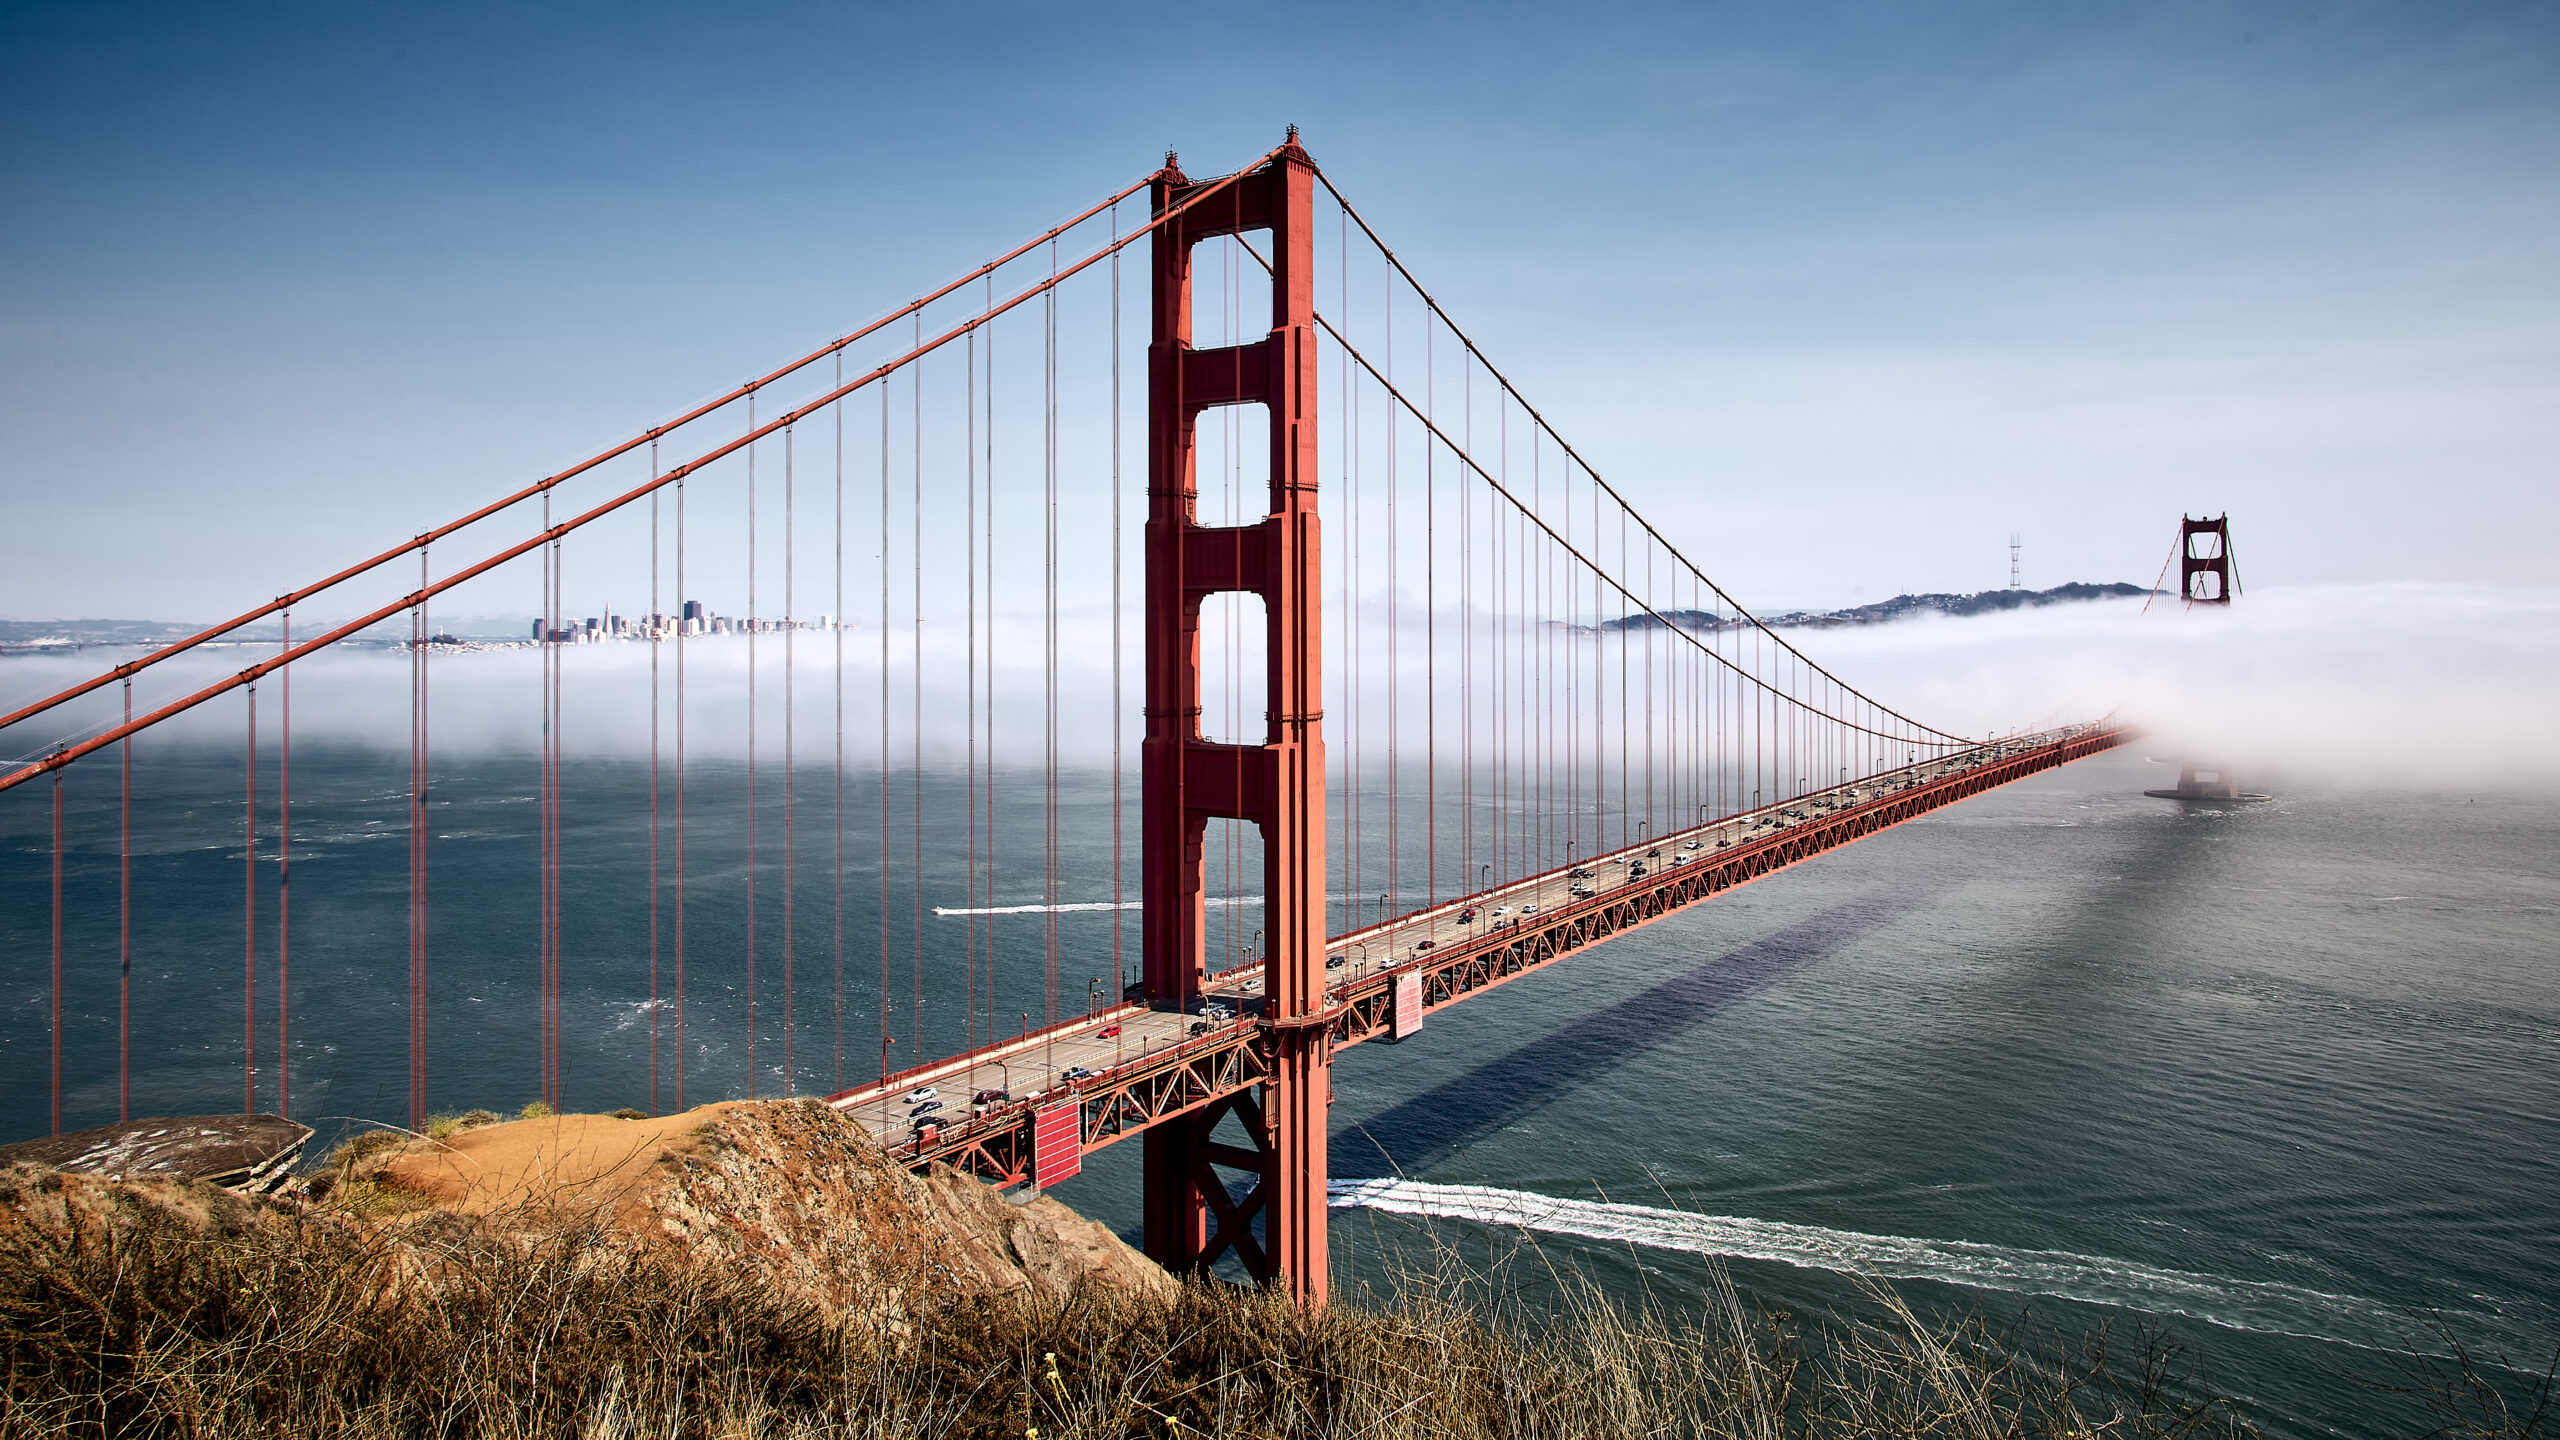 The Golden Gate Bridge against a misty blue sky in San Francisco, California, USA